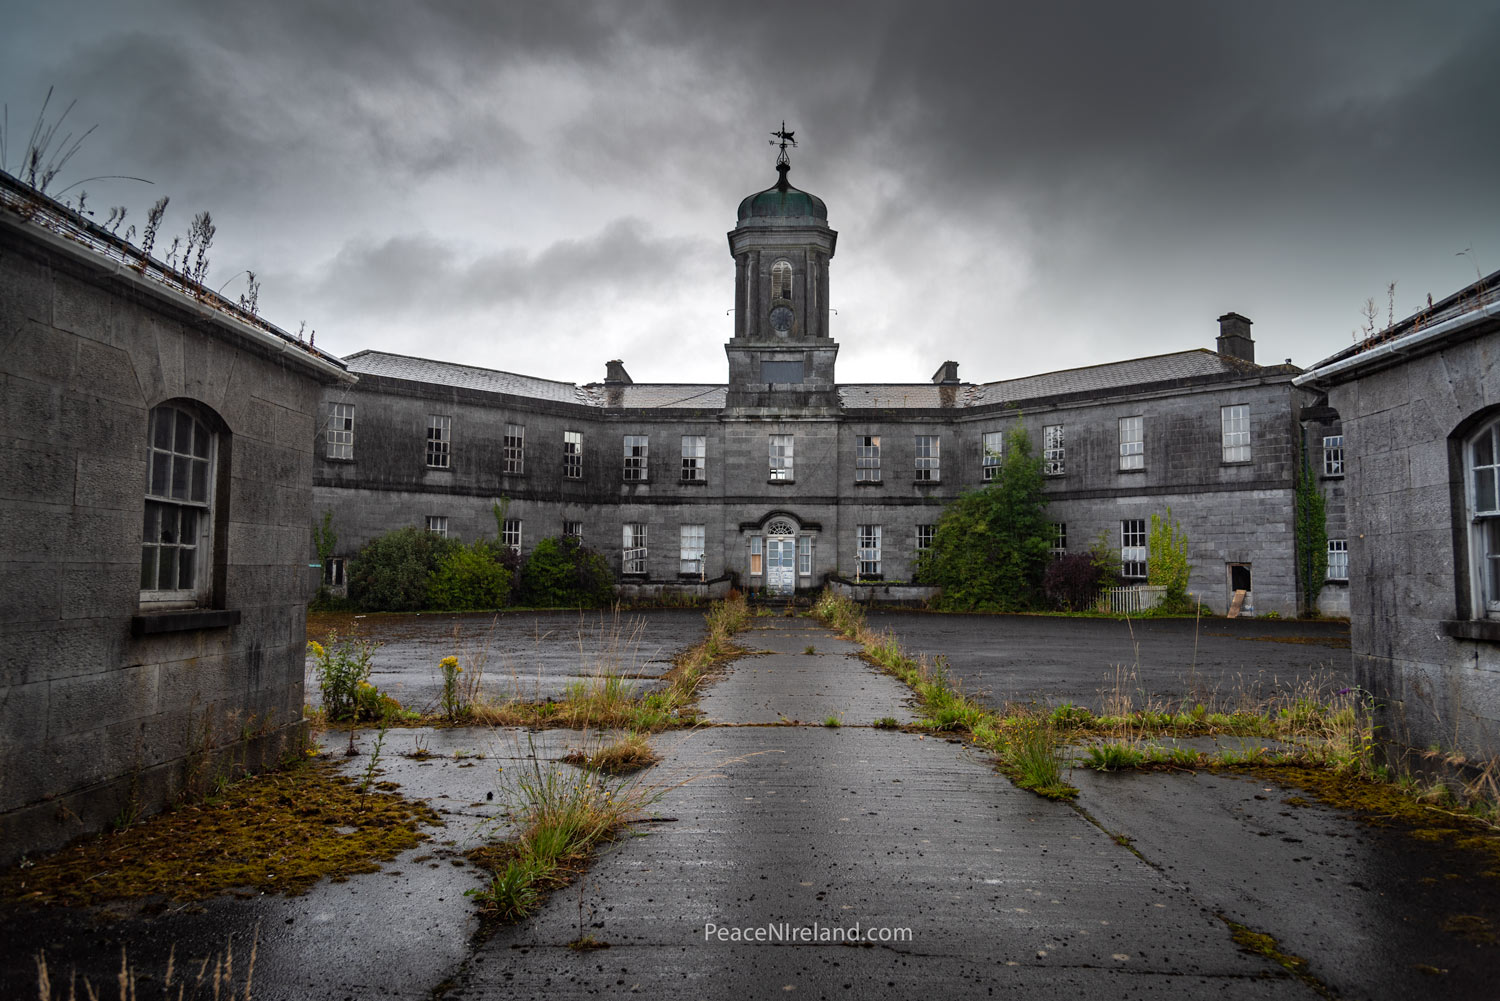 The former St Brigid's Hospital and Asylum, Ballinasloe, County Galway